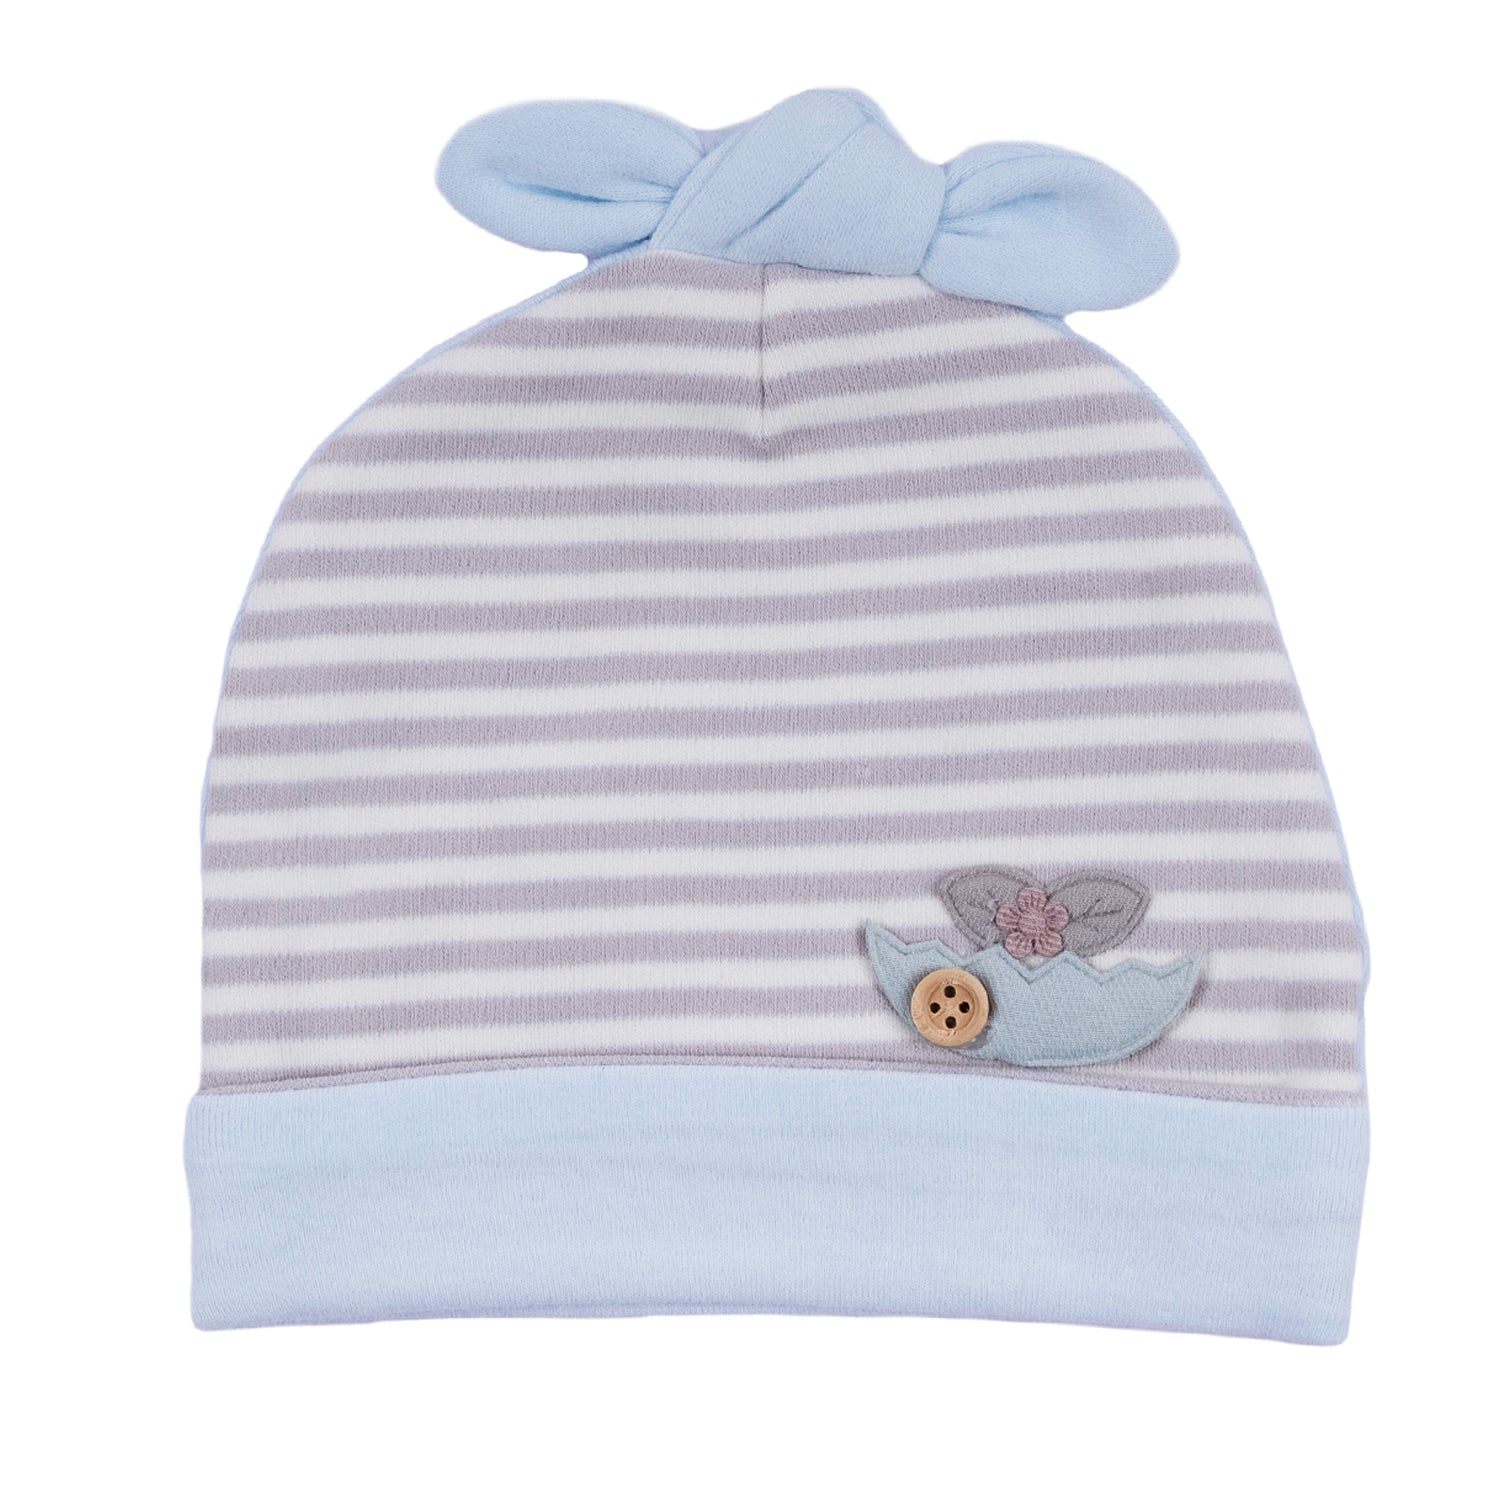 Baby Moo Striped All Season Stretchable Hosiery Warm 3D Beanie Cap - Blue, Grey